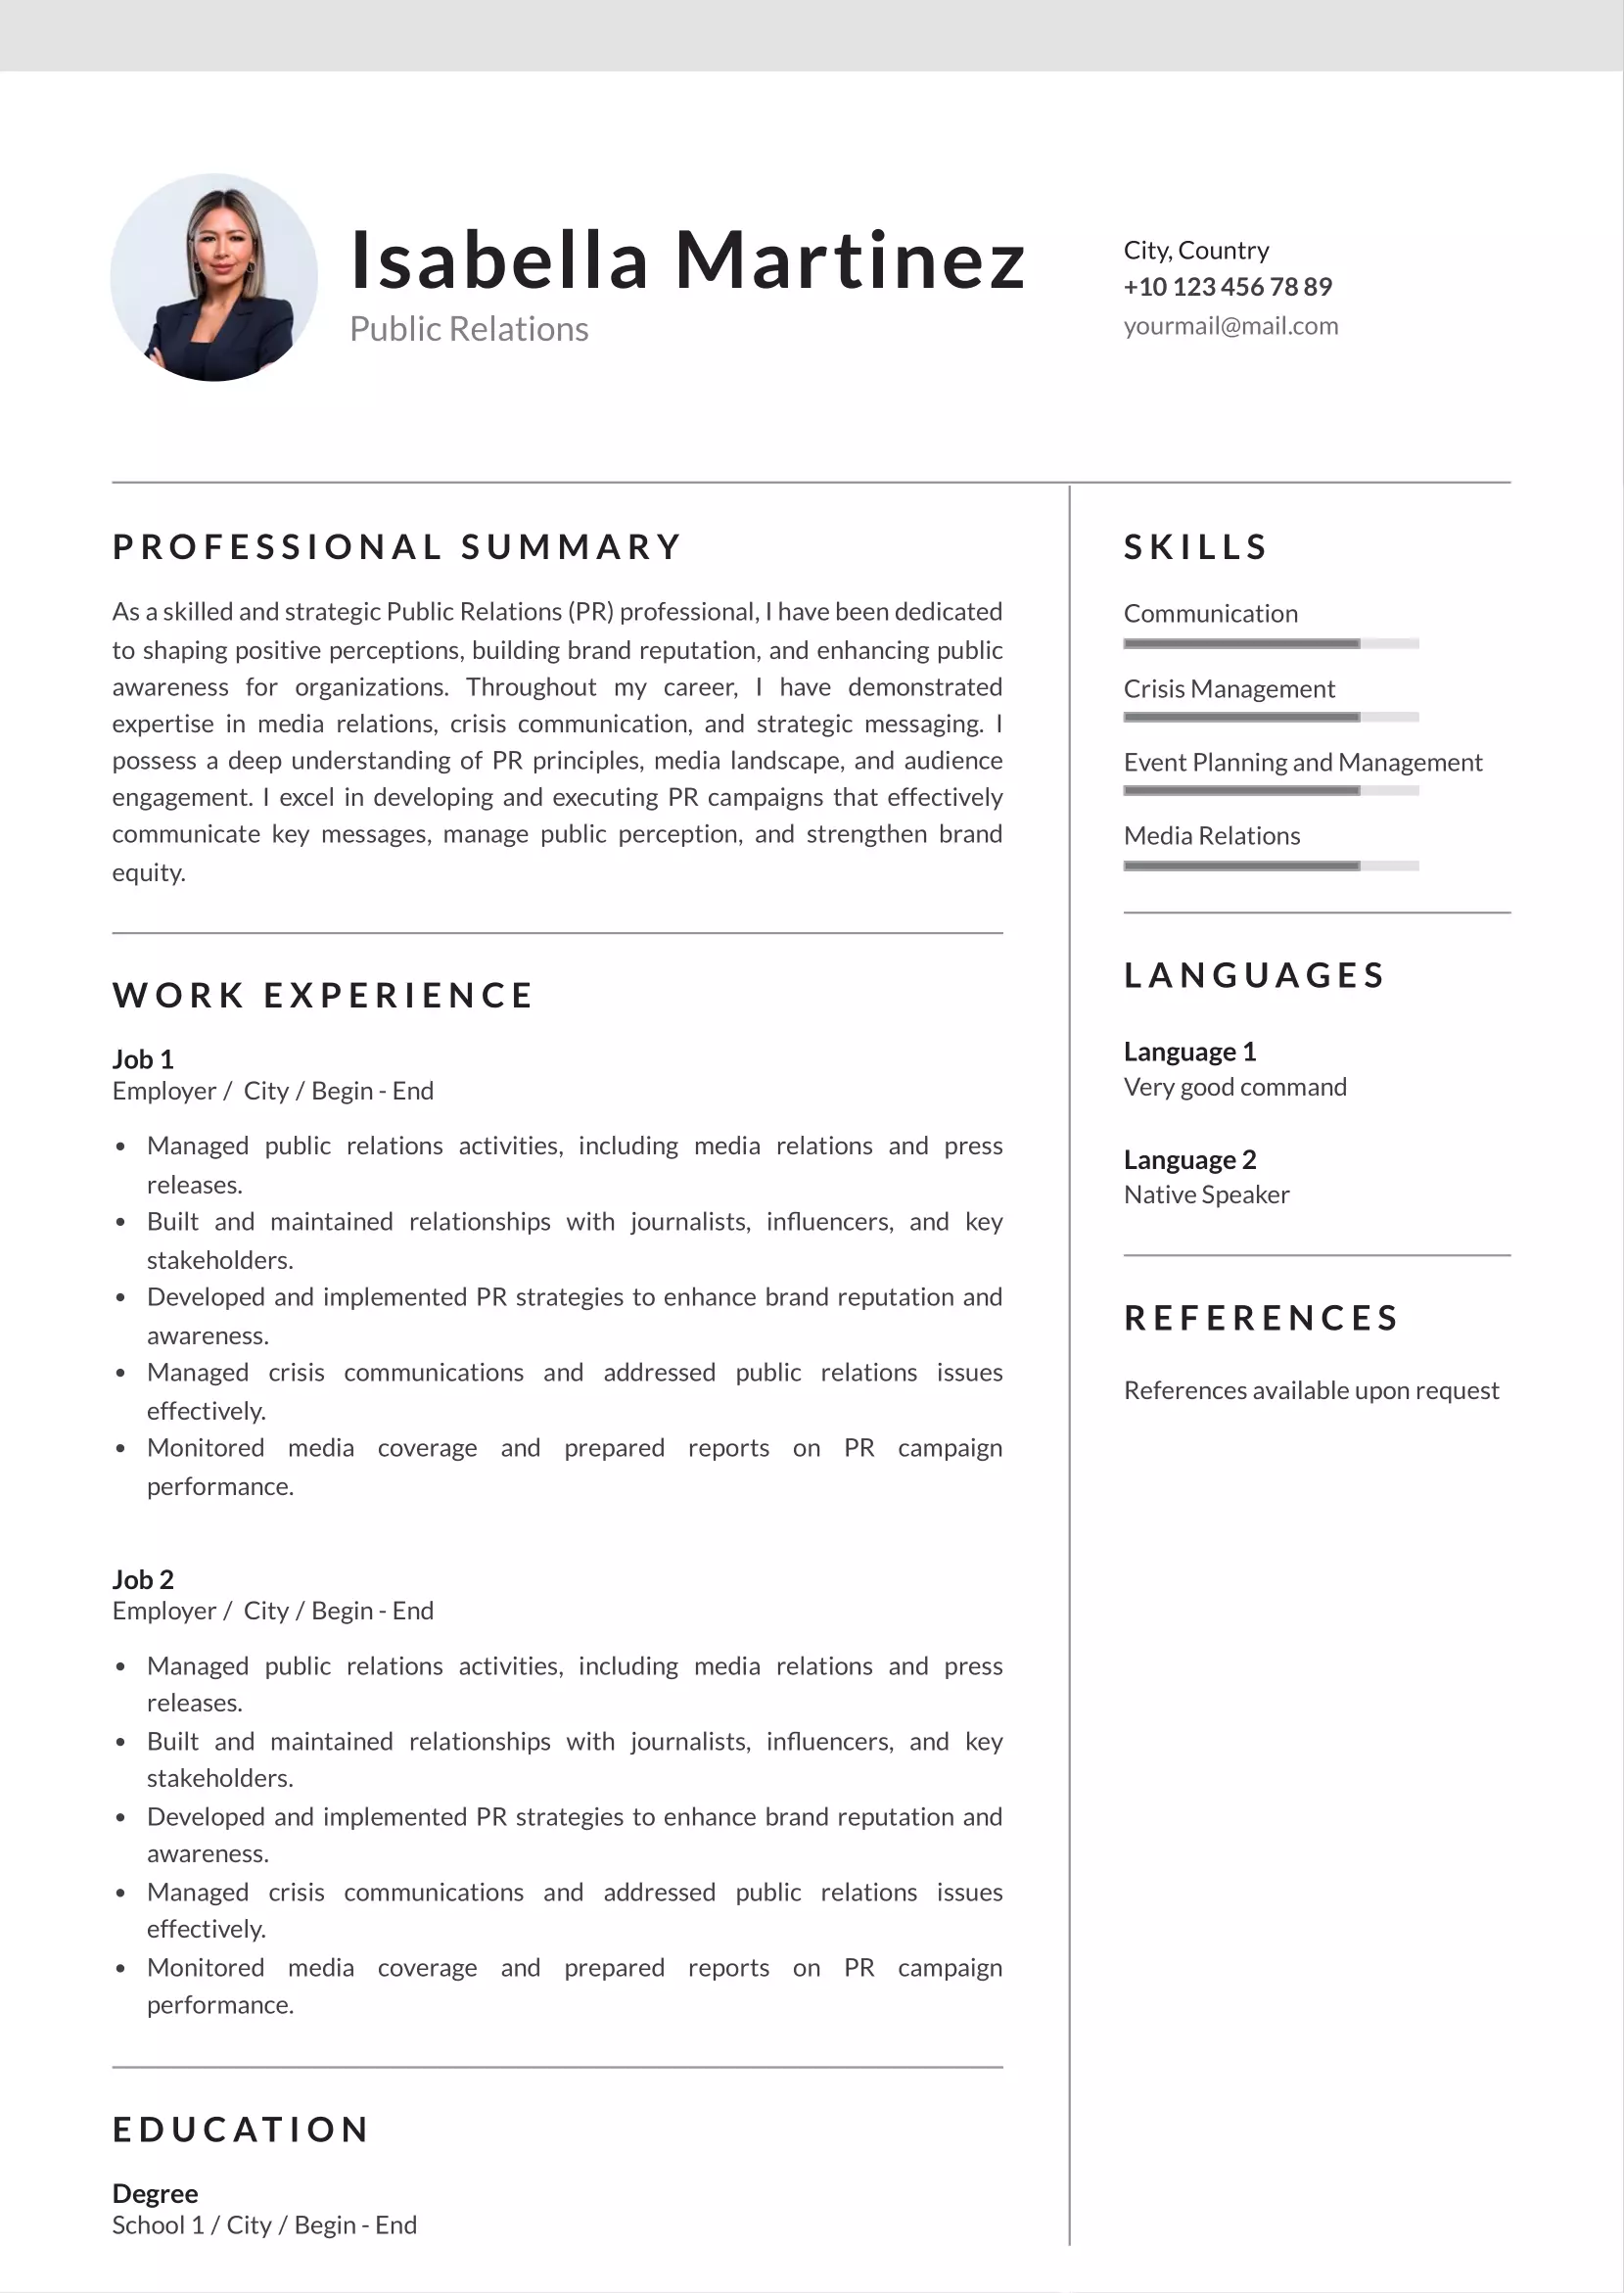 Public relations resume CV